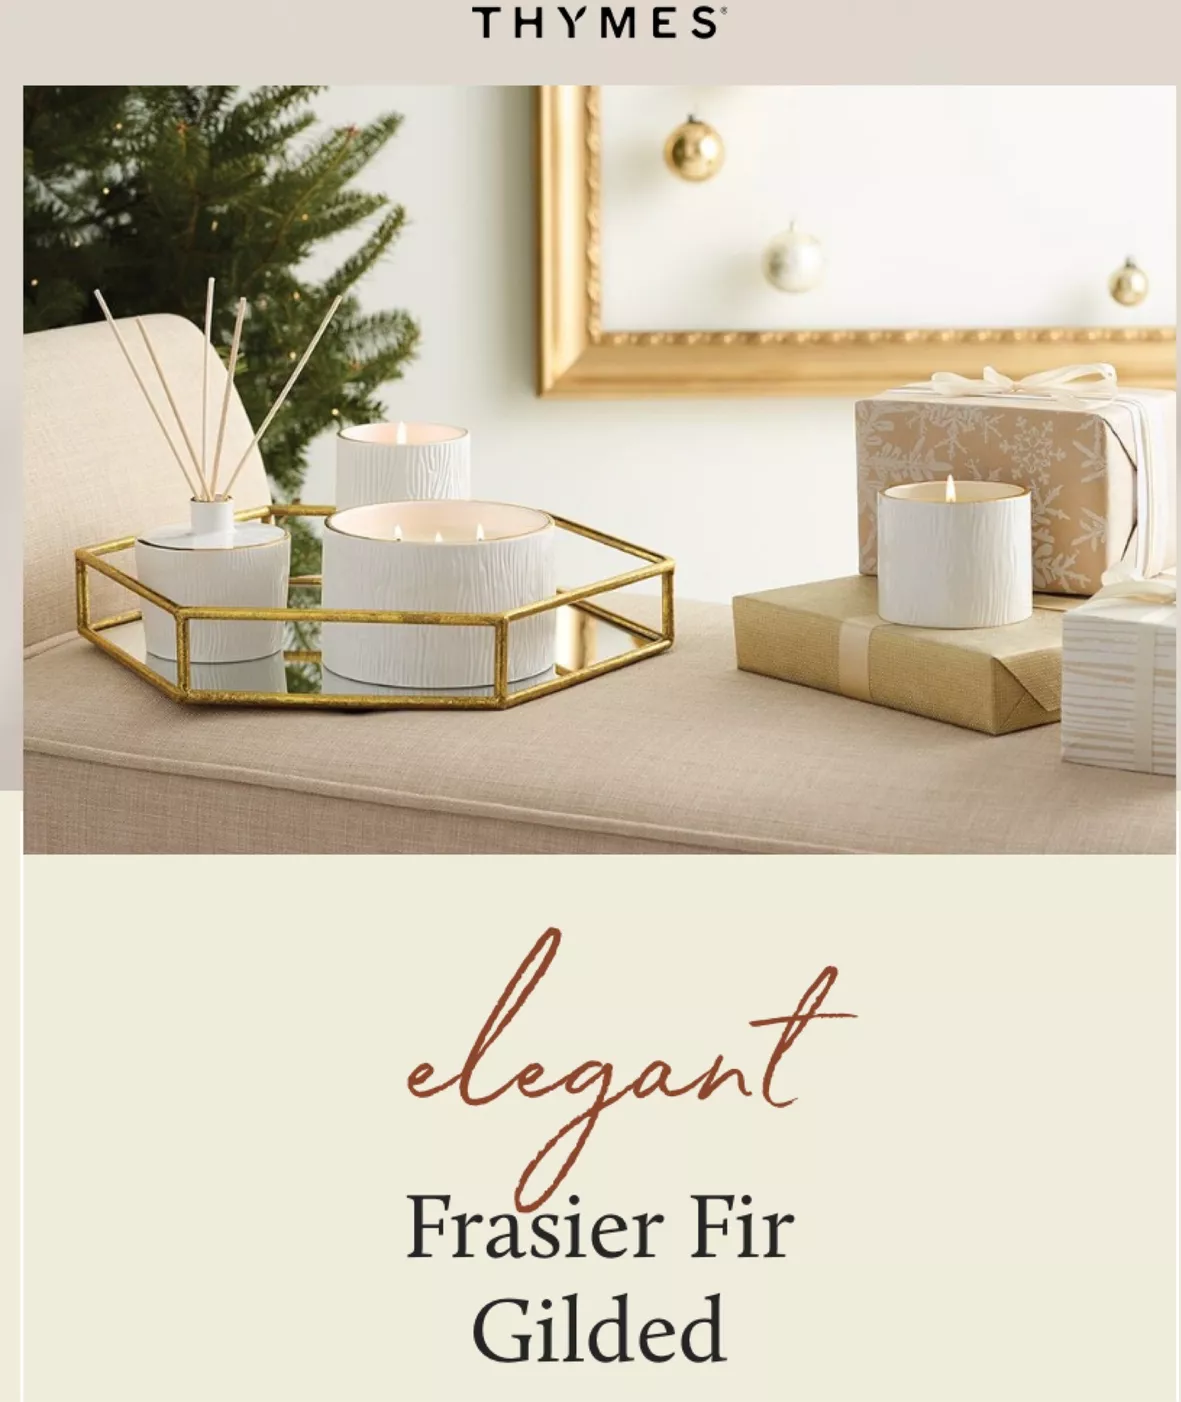 Frasier Fir Ceramic Reed Diffuser|Thymes